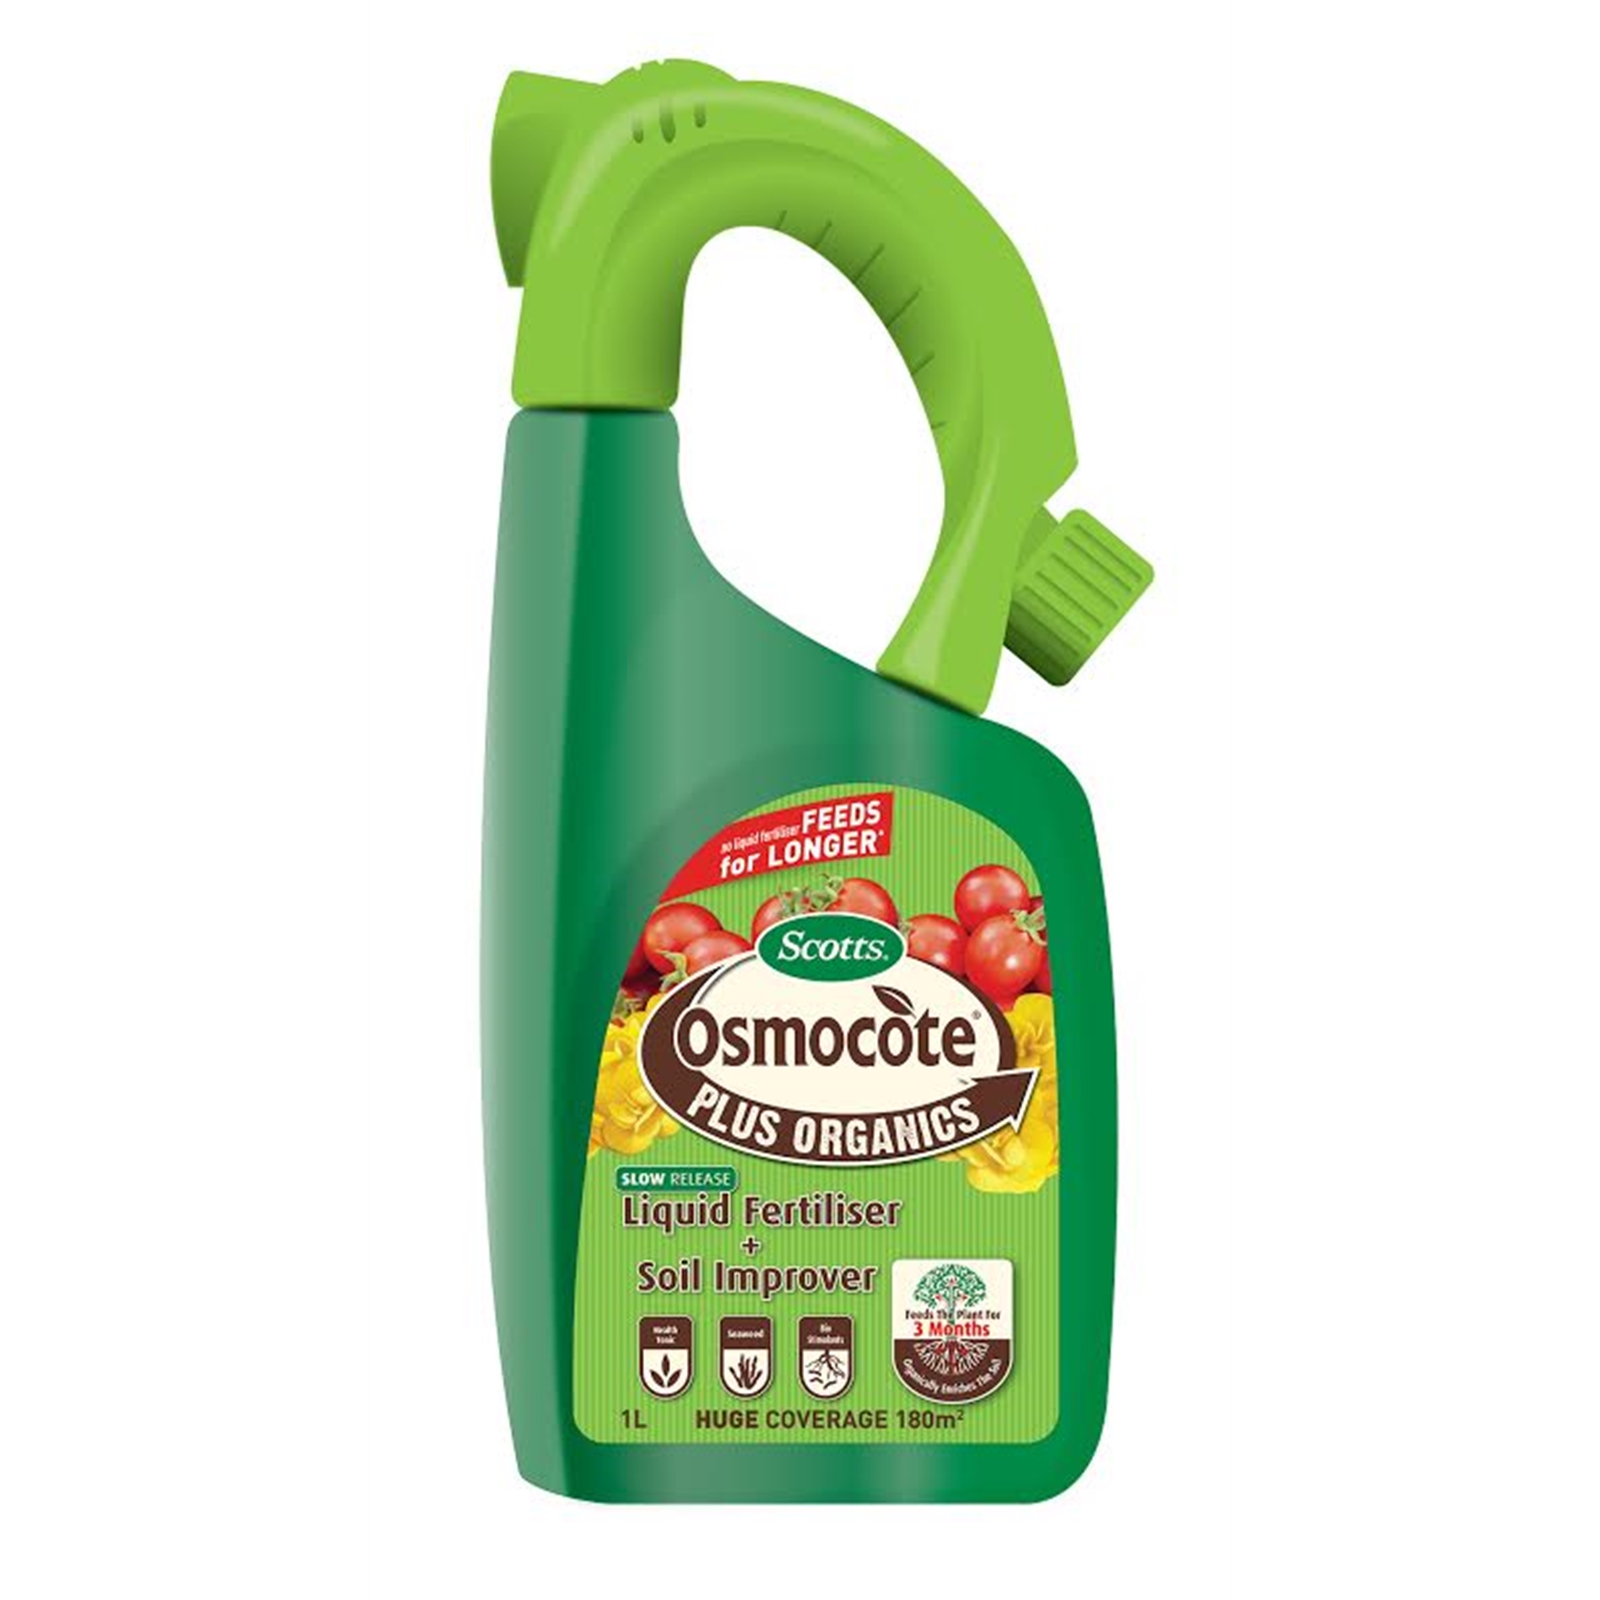 Osmocote Plus Organics 1L Liquid Fertiliser And Soil Improver Hose-on